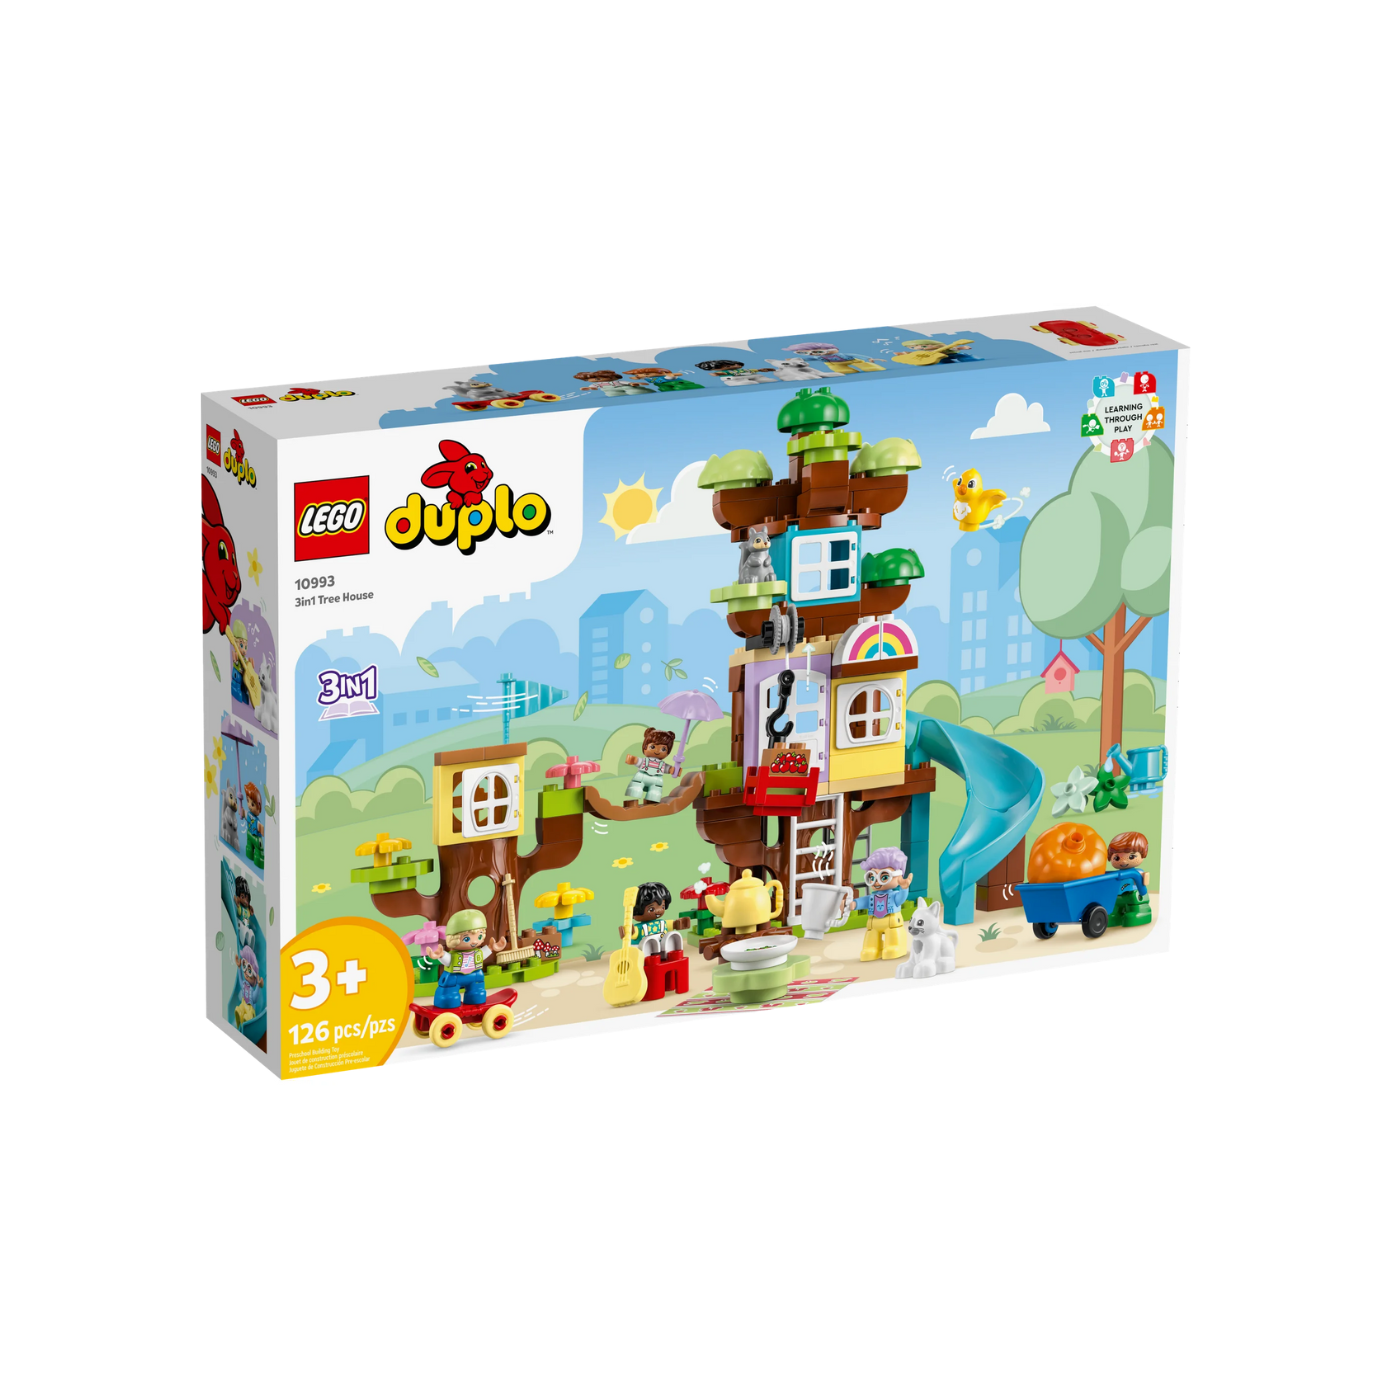 LEGO Duplo 3-in-1 Tree House 10993 Creative Building Toy, Includes 8 Figures + Get $15 Walmart Cash!